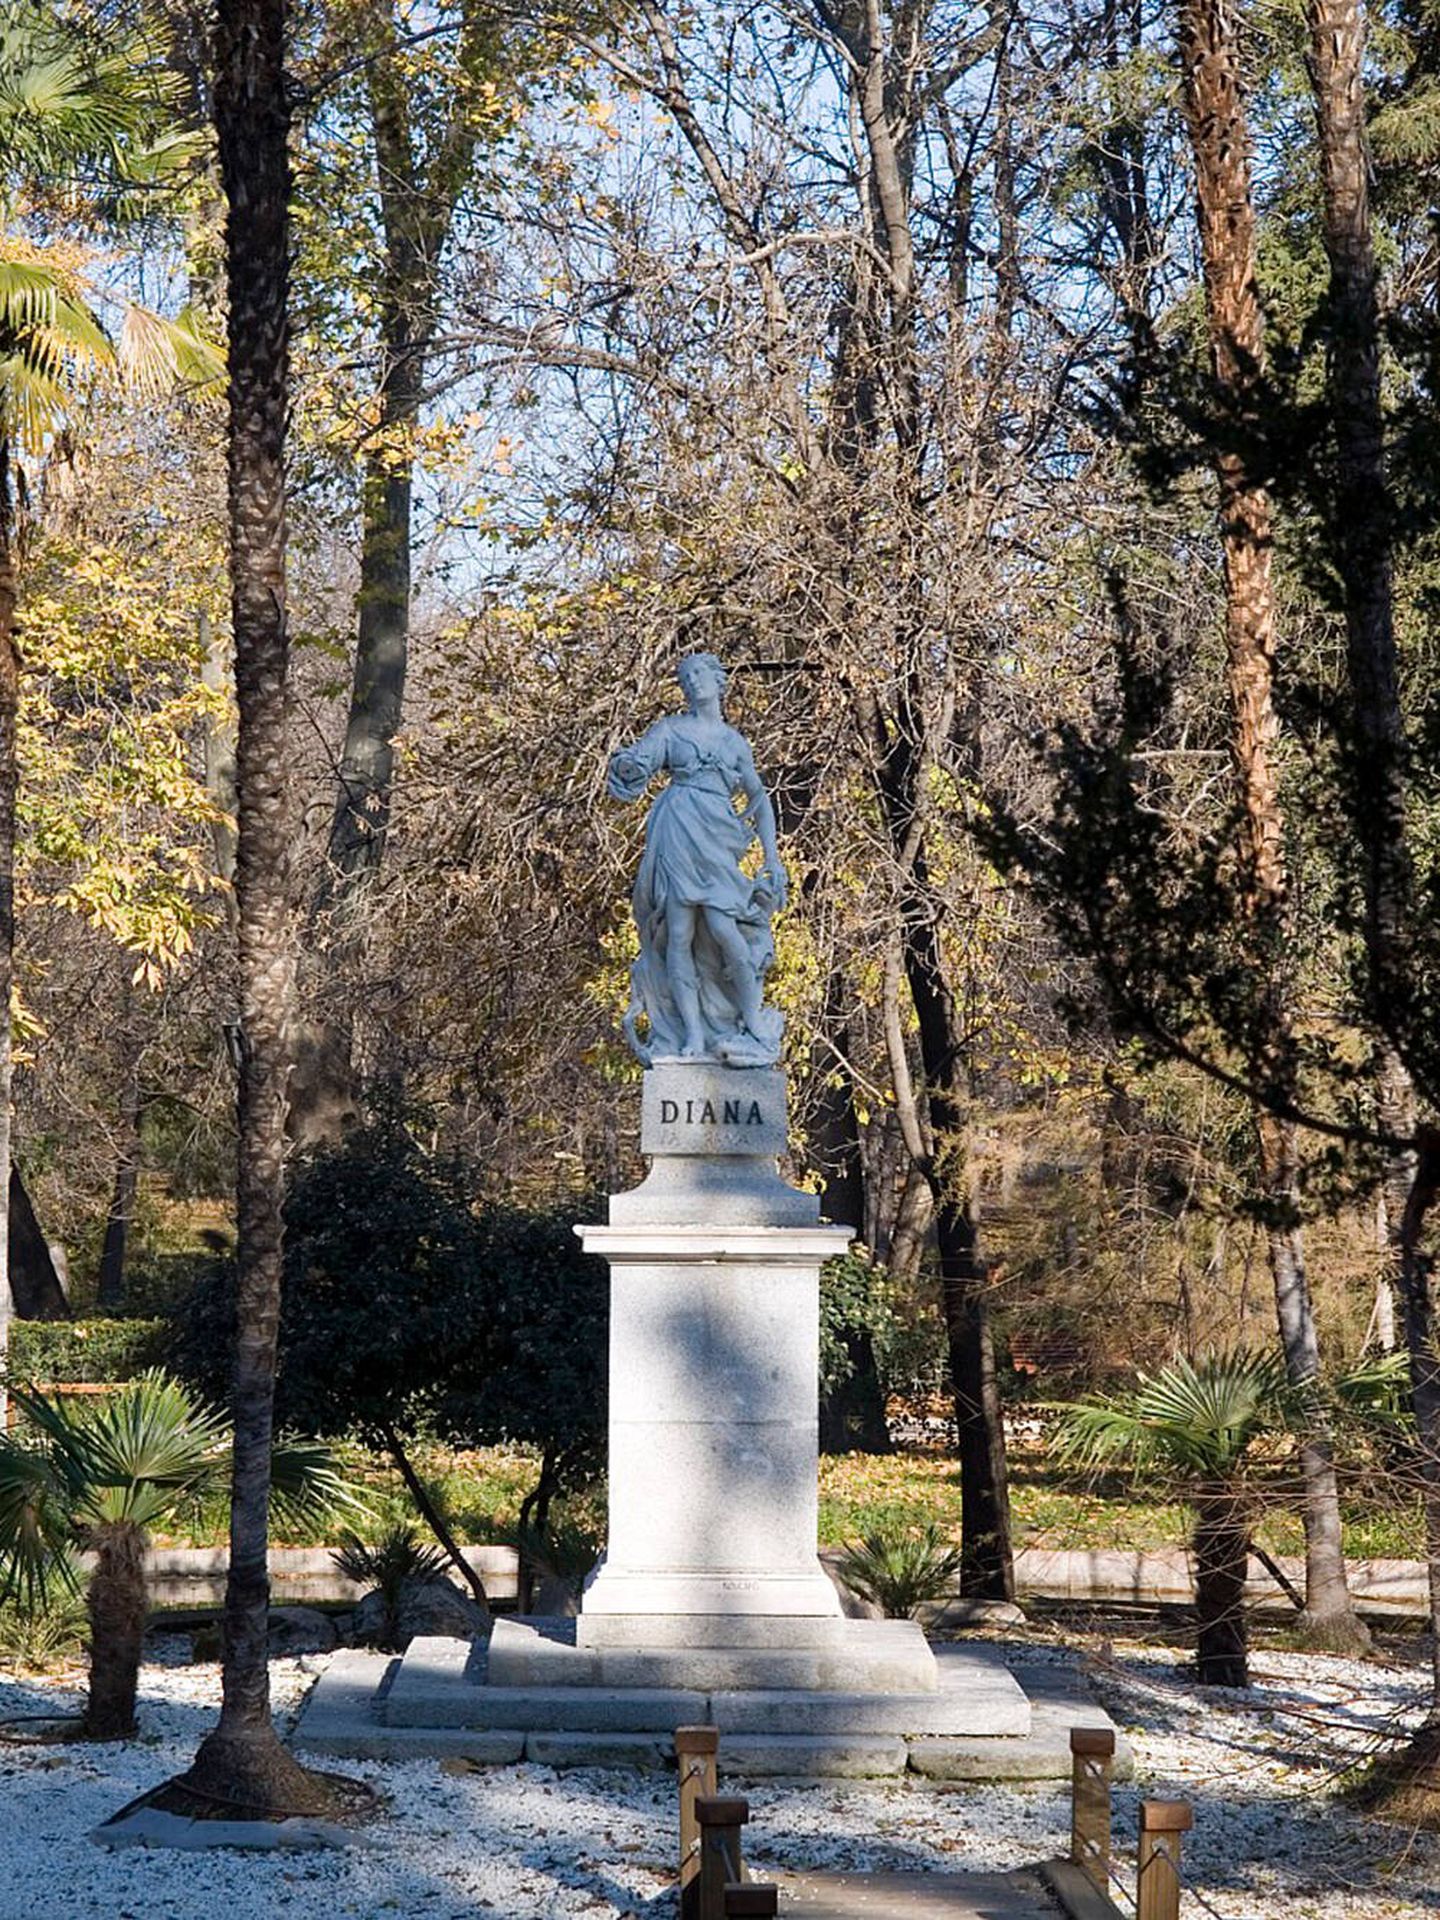 La estatua de Diana. (Biblioteca digital memoria de Madrid)